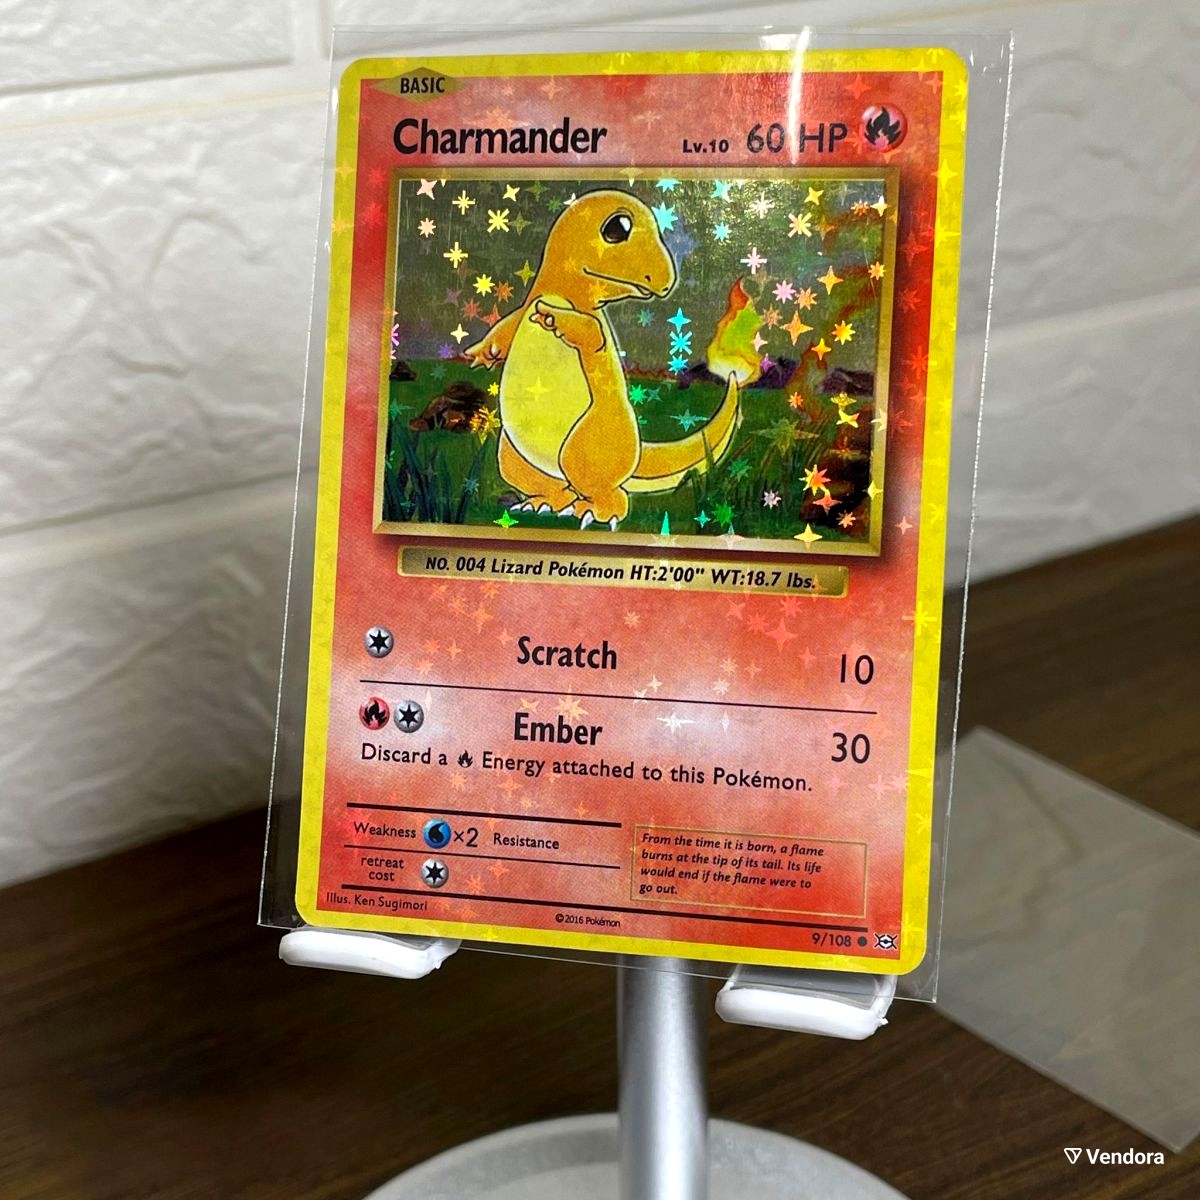 Pokemon - Charmander (9/108) - XY Evolutions - Reverse Holo